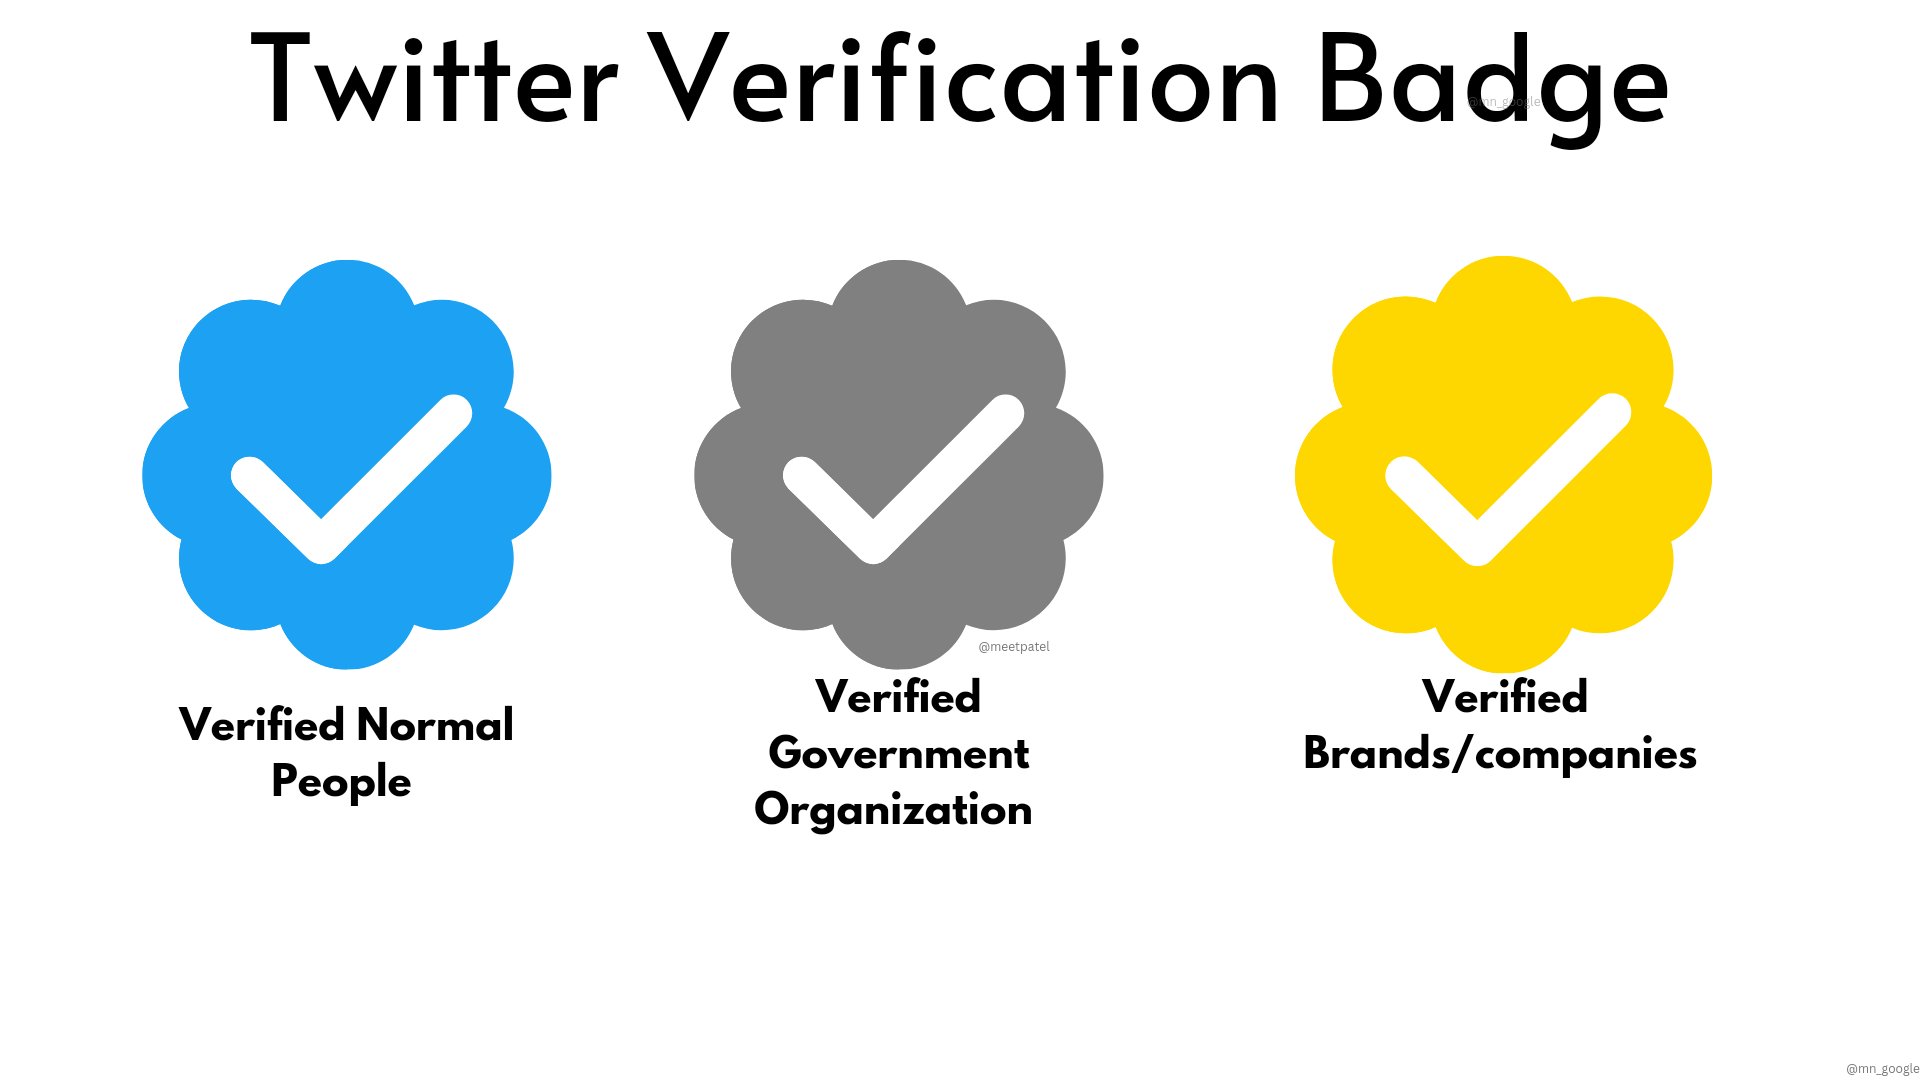 Twitter verification badges